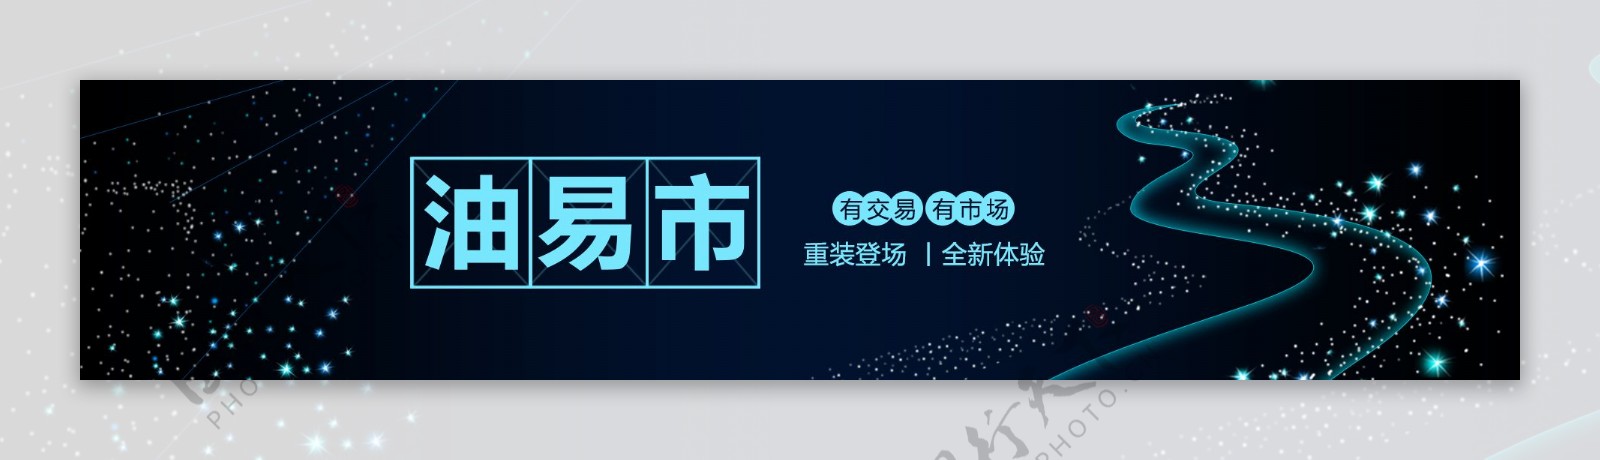 酷炫梦幻璀璨星空背景banner